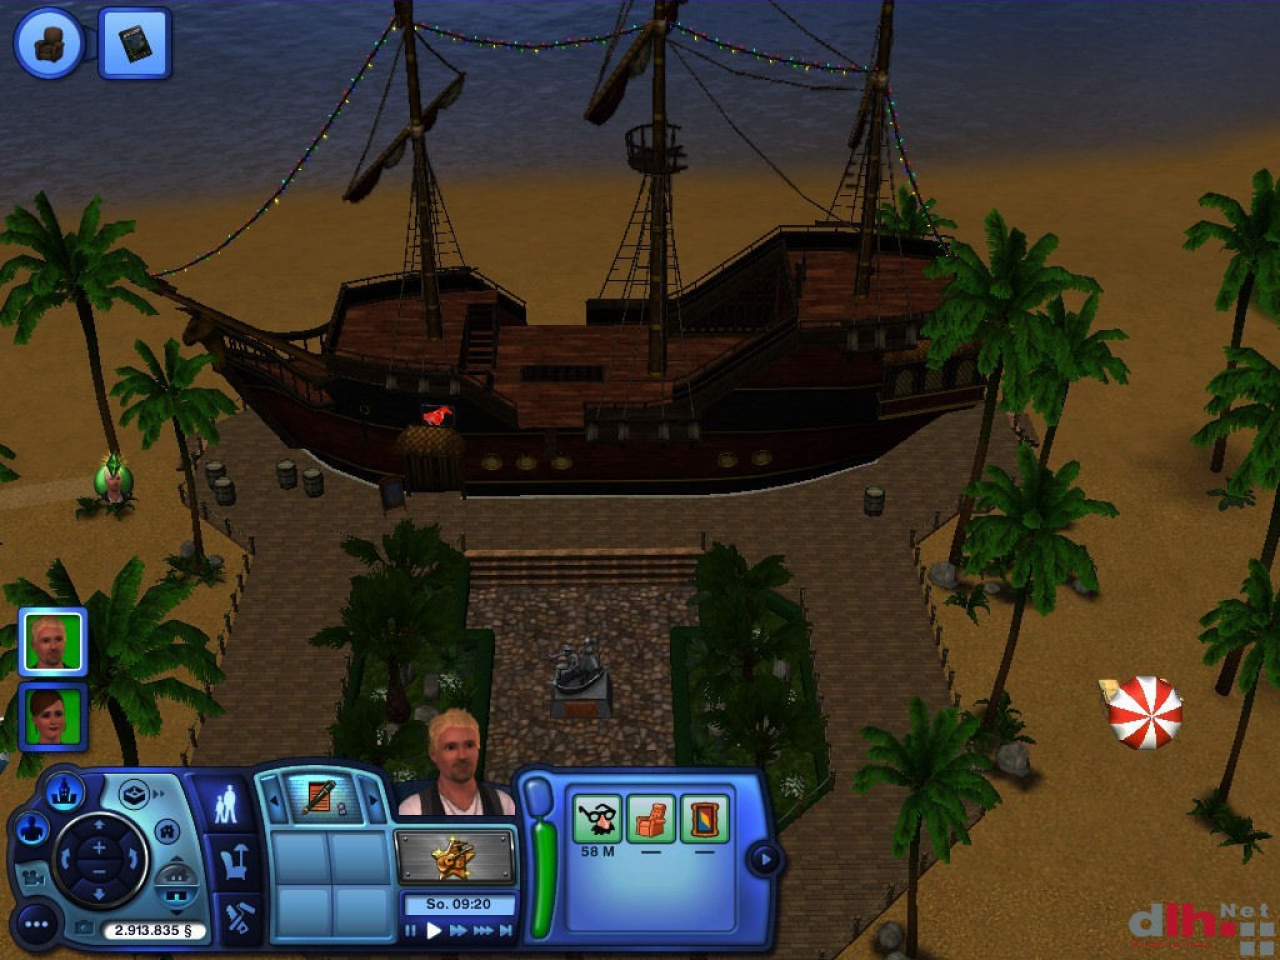 Die Sims 3 Barnacle Bay Media Screenshots Dlhnet The Gaming People